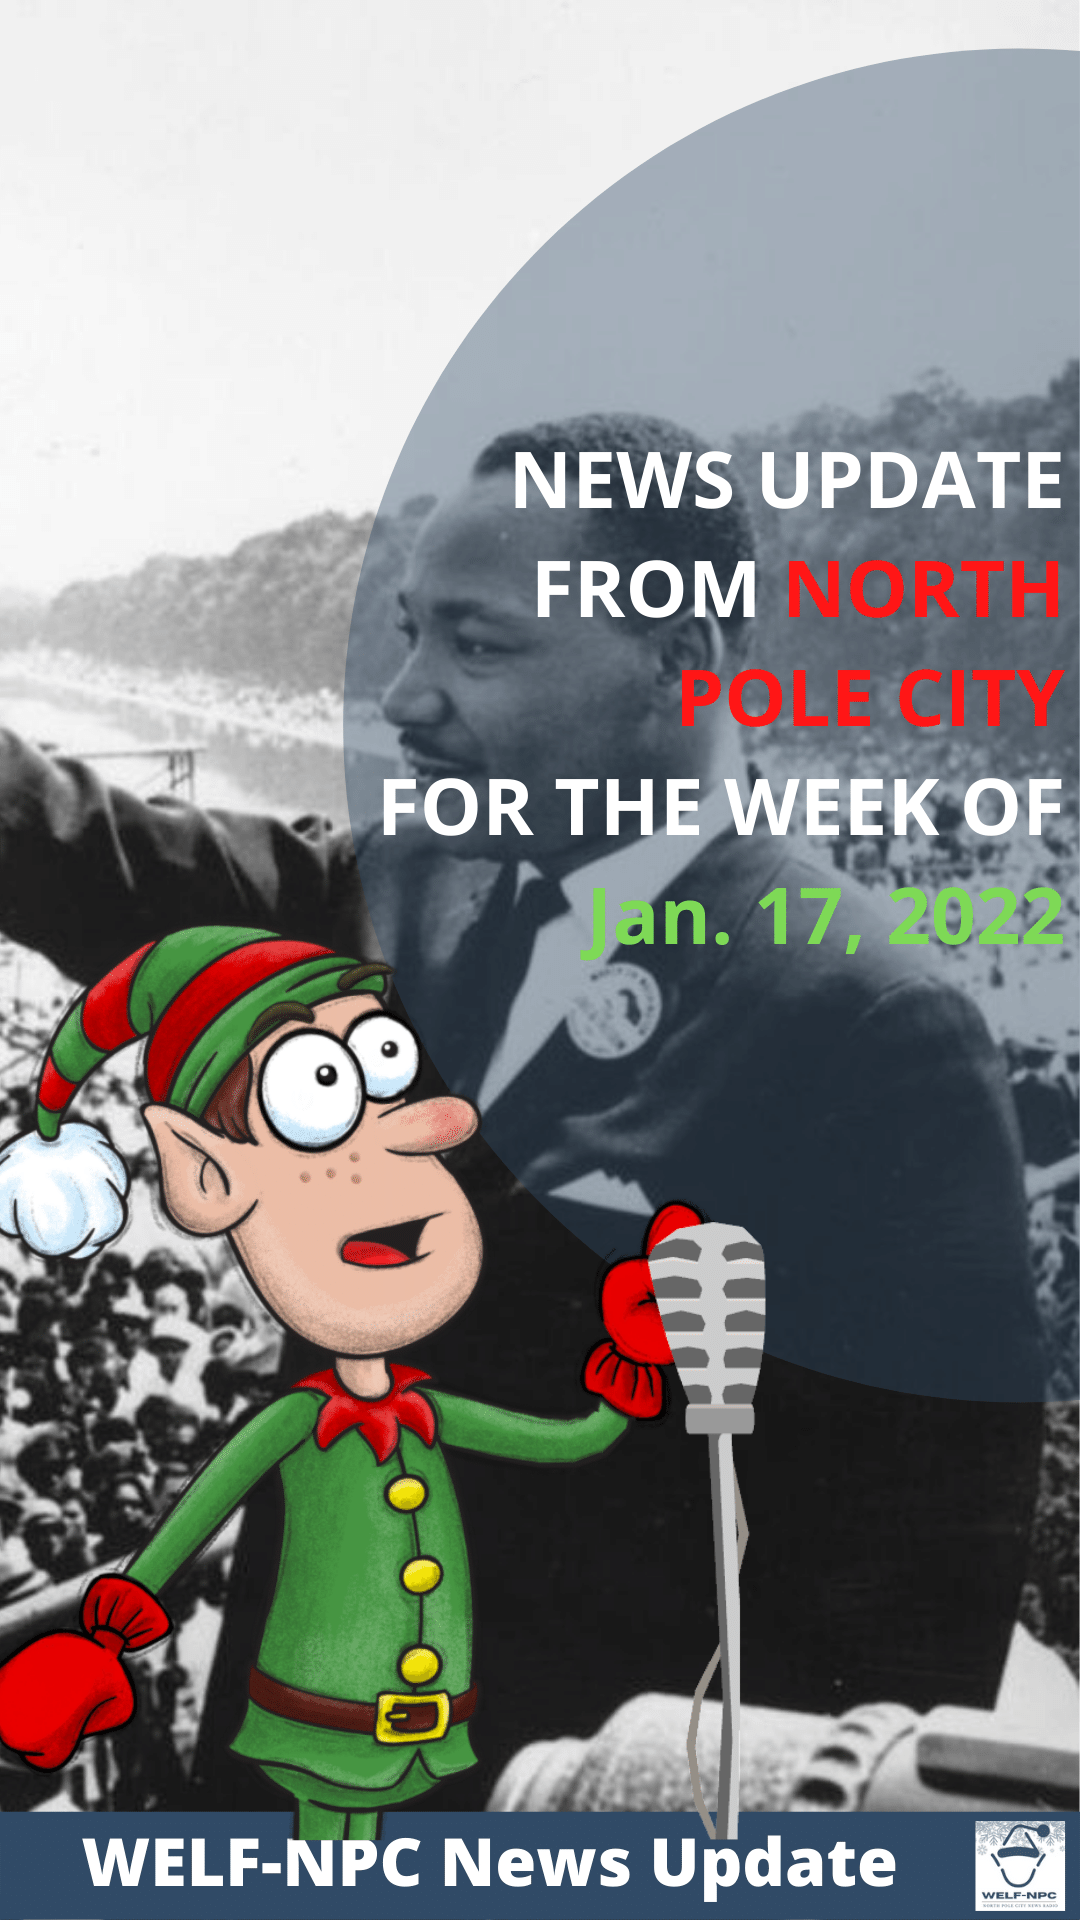 News Update - January 17, 2022